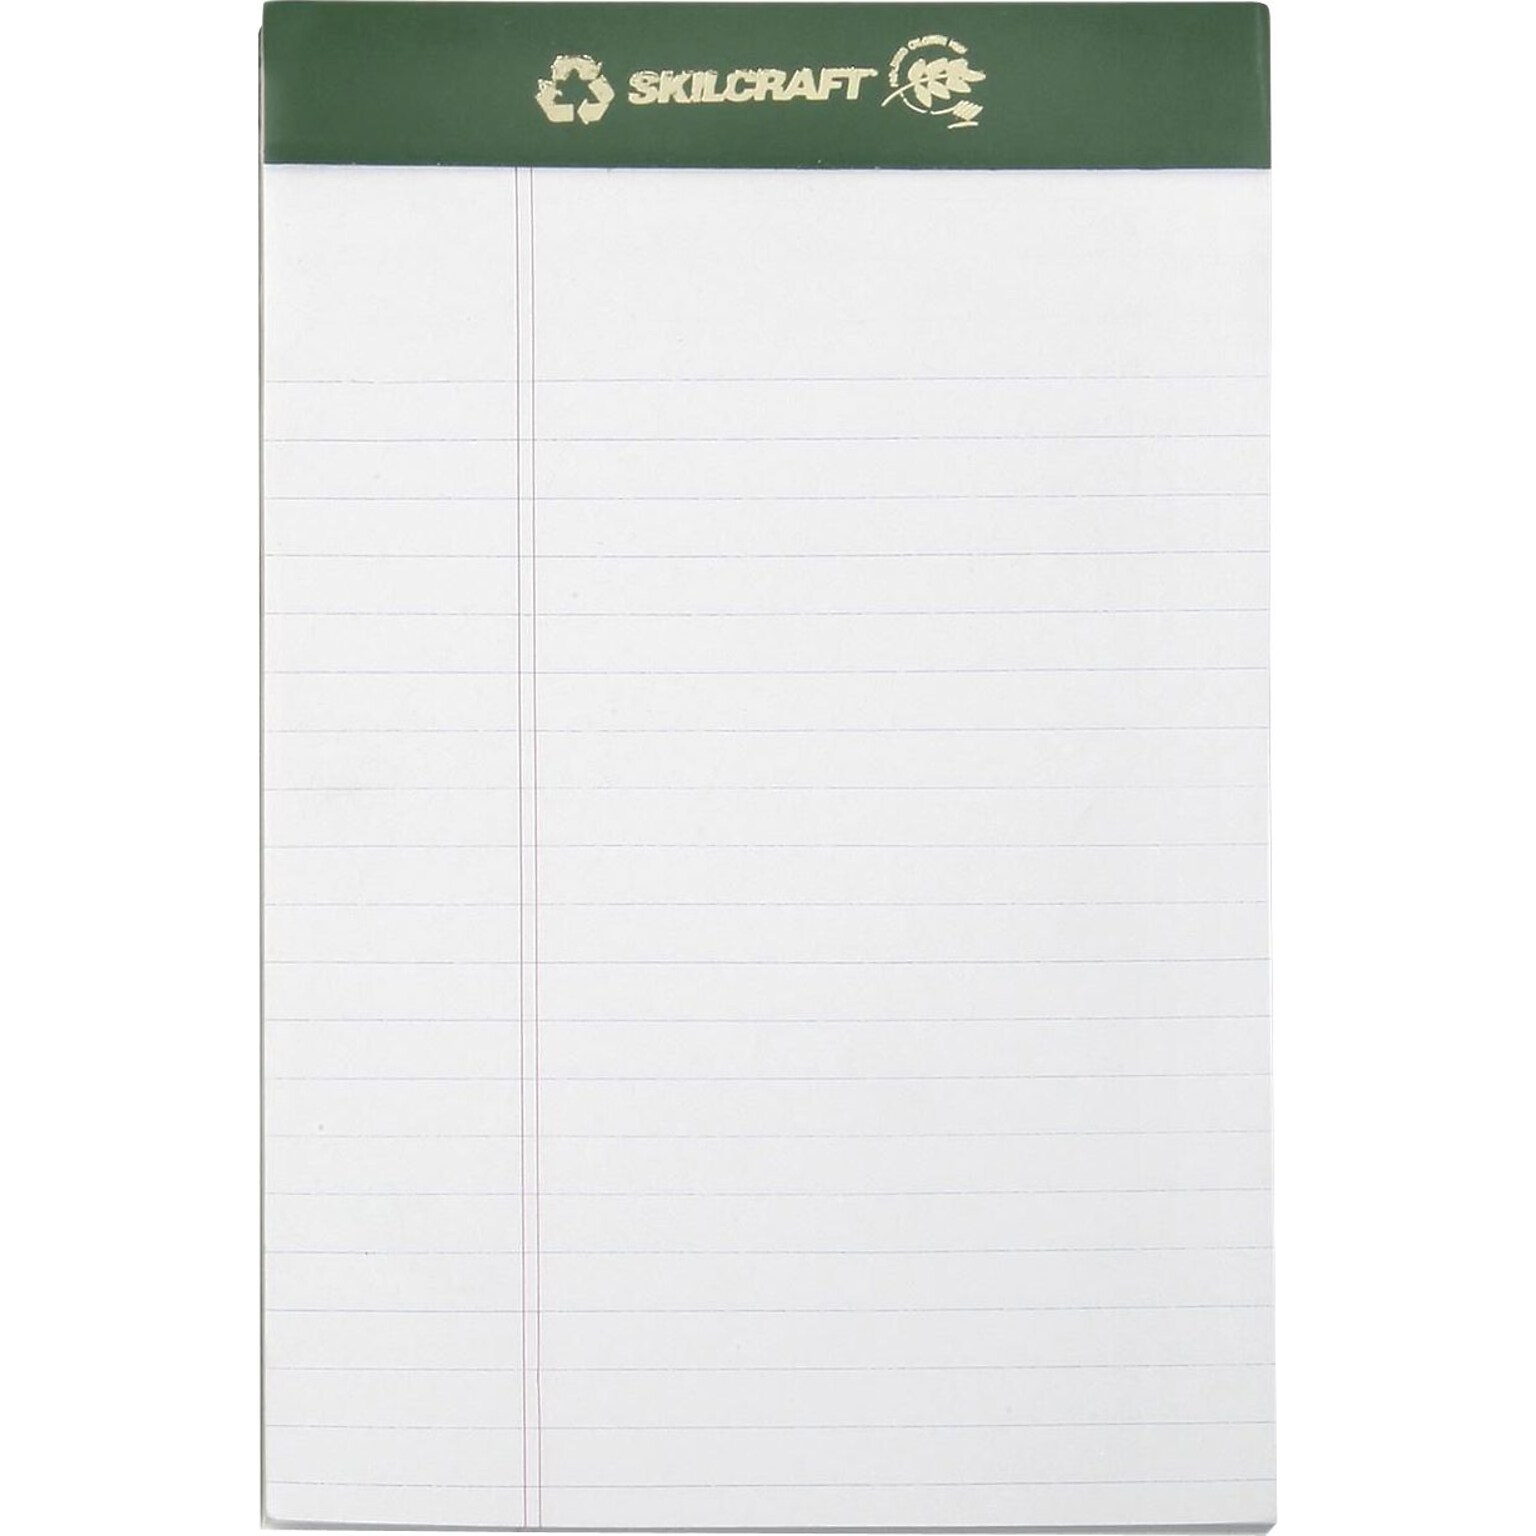 Skilcraft Writing Pad, 5 x 8, Green, 12/Pack (NSN5169629)